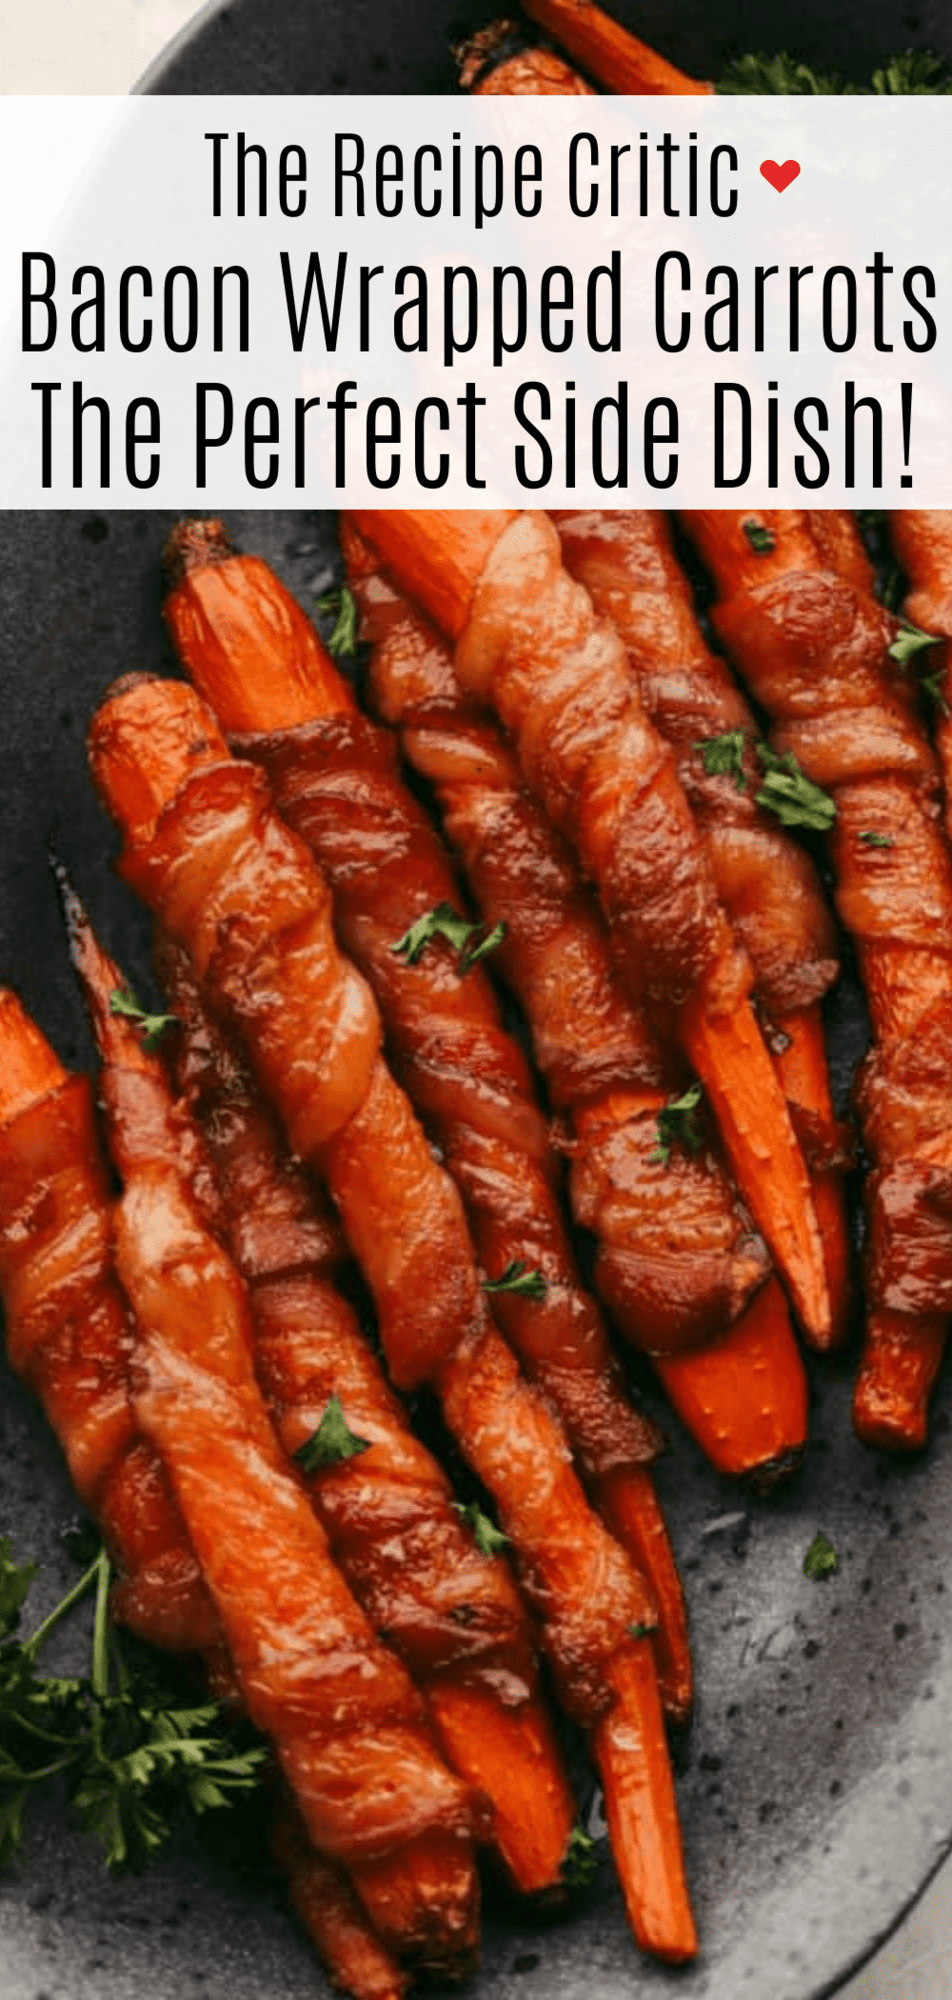 Bacon Wrapped Carrots with Honey Glaze Sauce